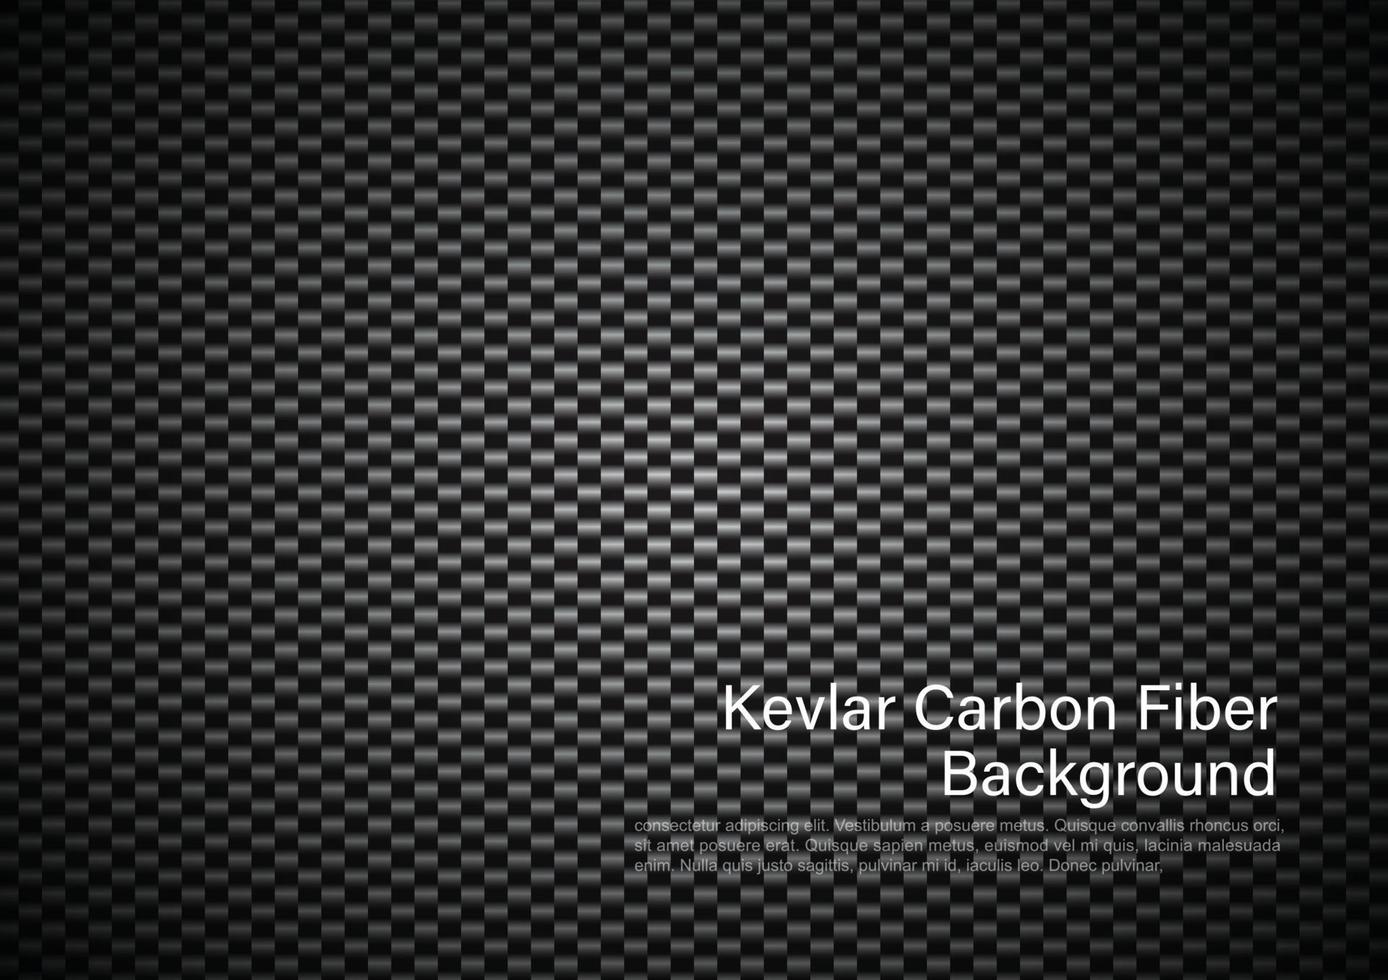 fundo de fibra de carbono kevlar. ilustrador vetorial vetor